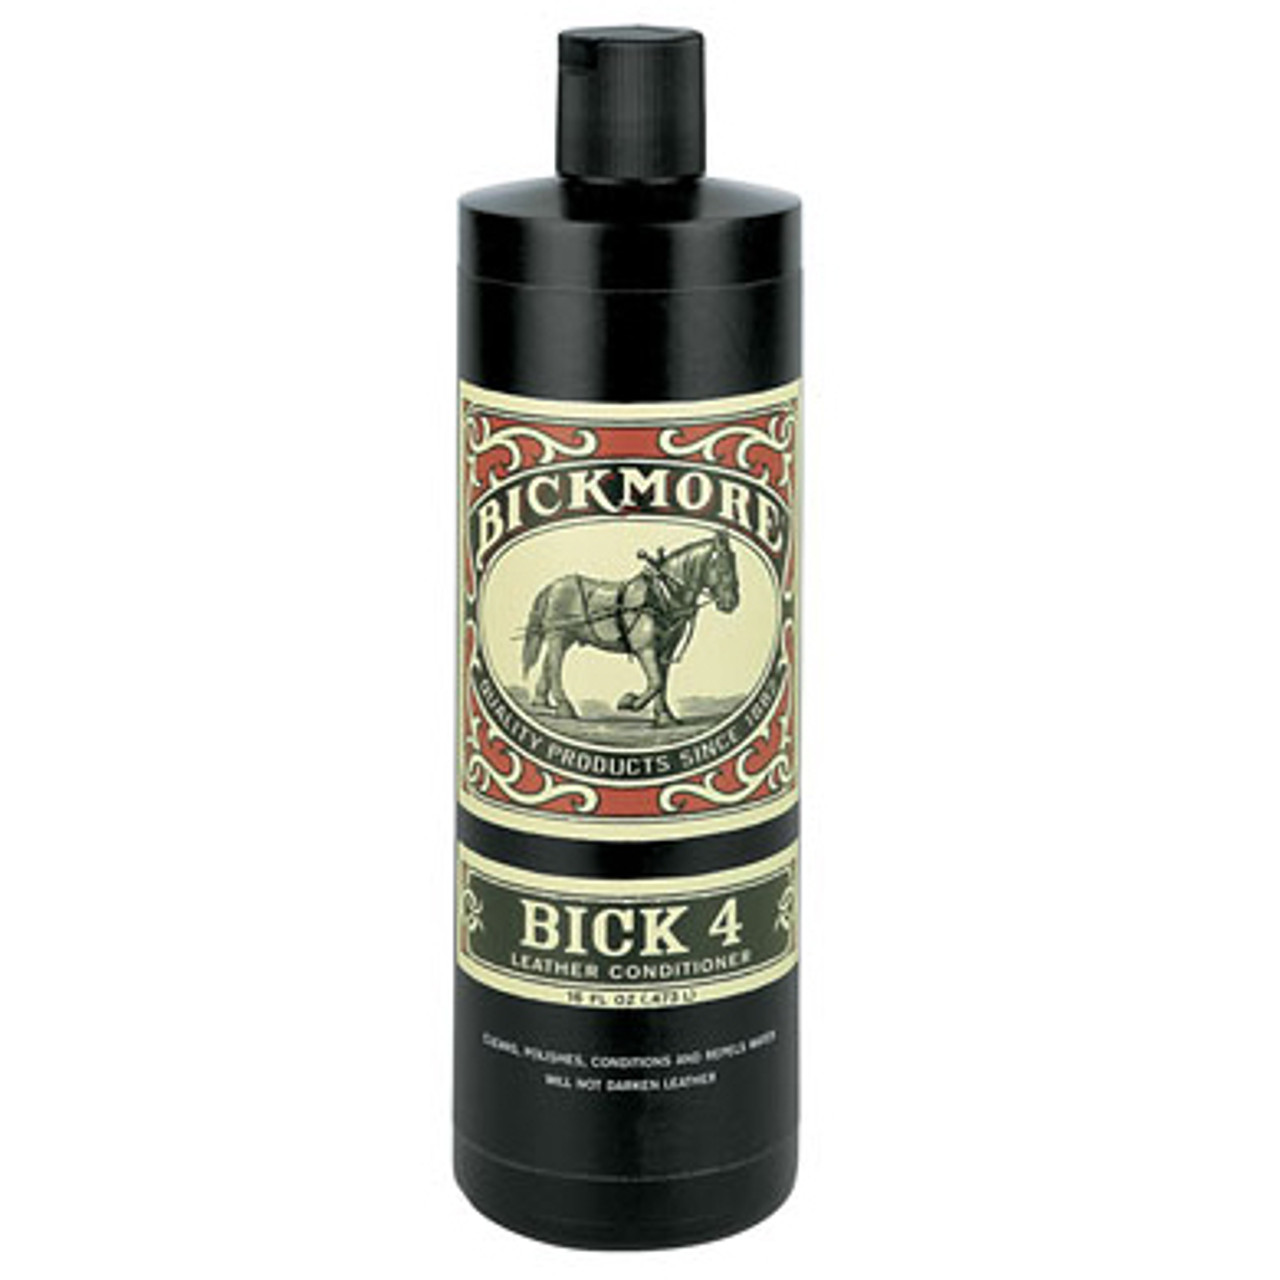 Bick-4 Leather Conditioner - 8 oz - Bickmore